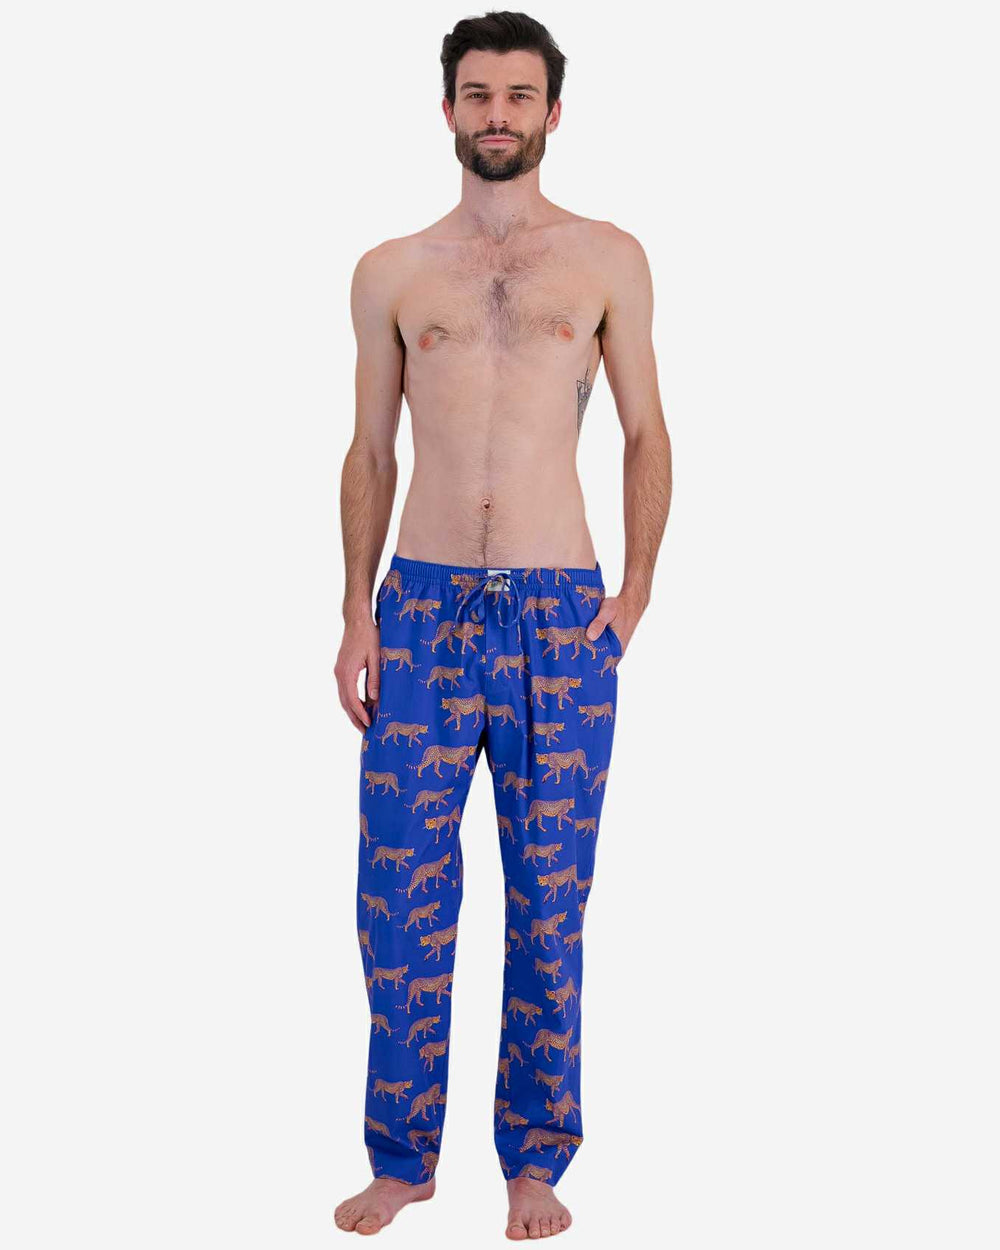 Mens pyjama bottoms - blue cheetah